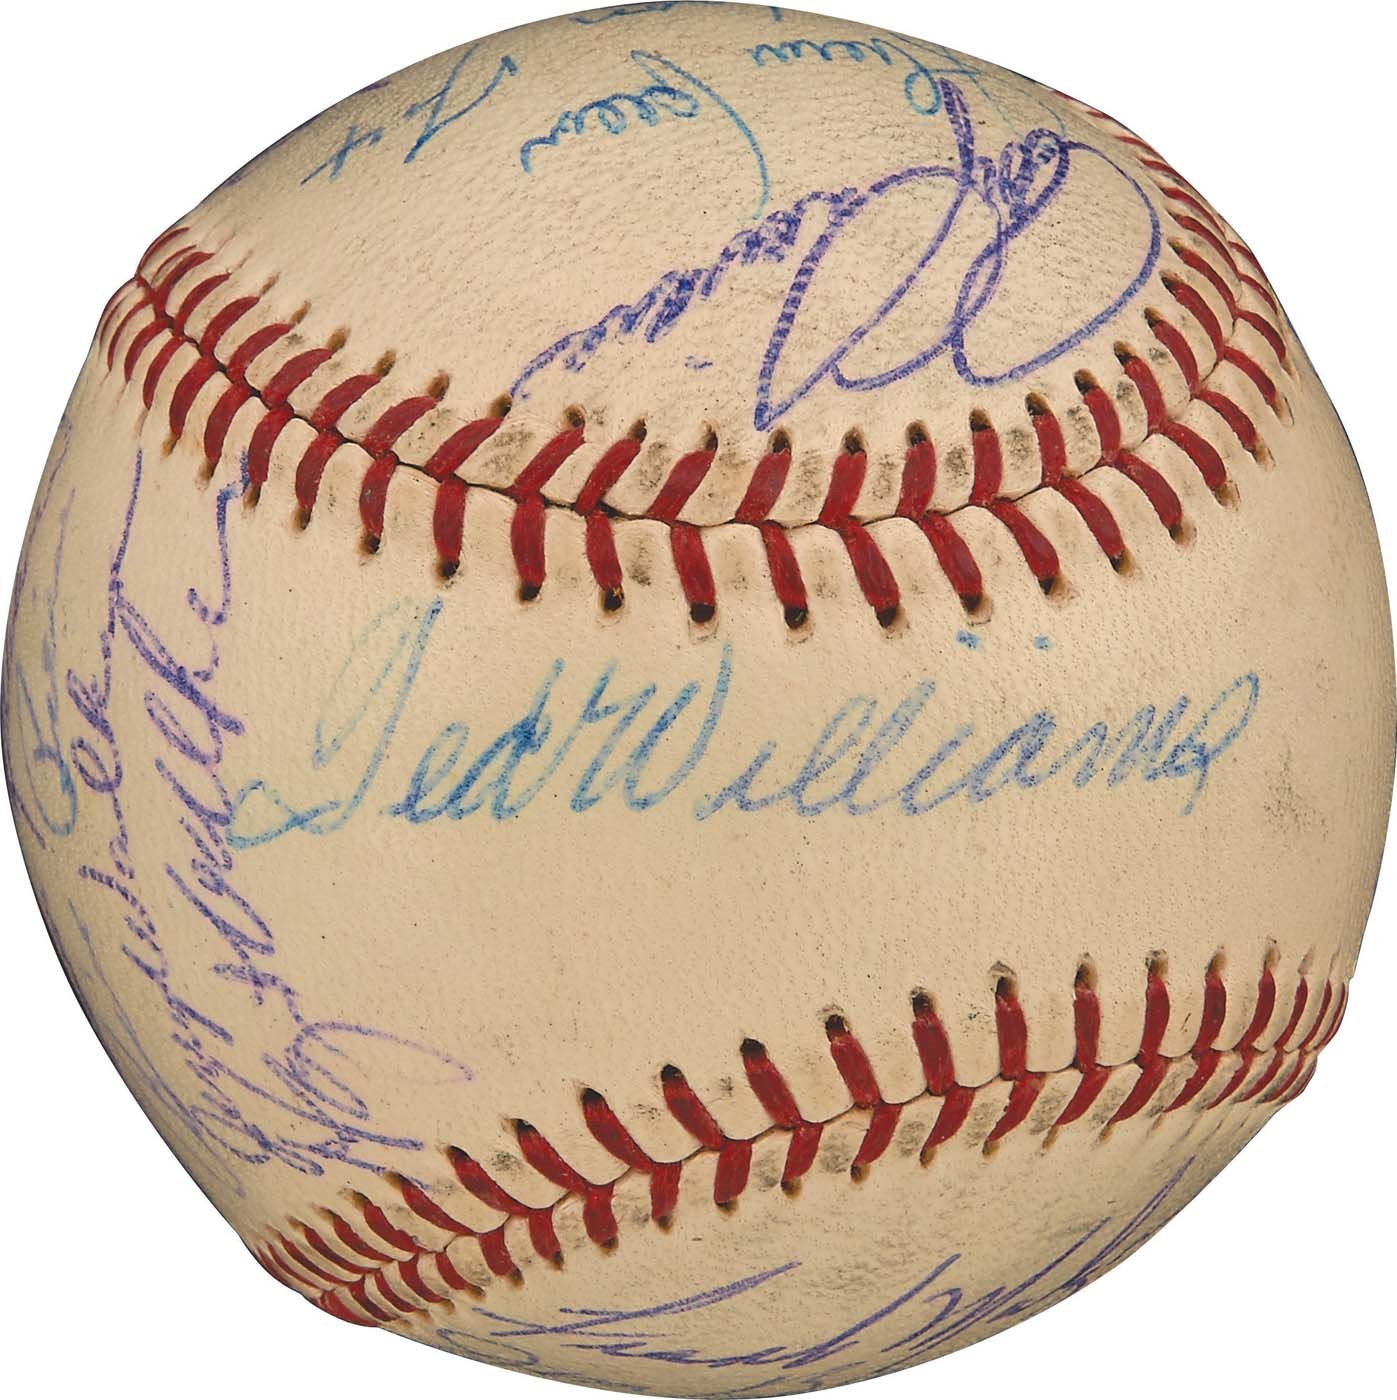 - 1959 American League All-Star Team-Signed Baseball (PSA & SGC)